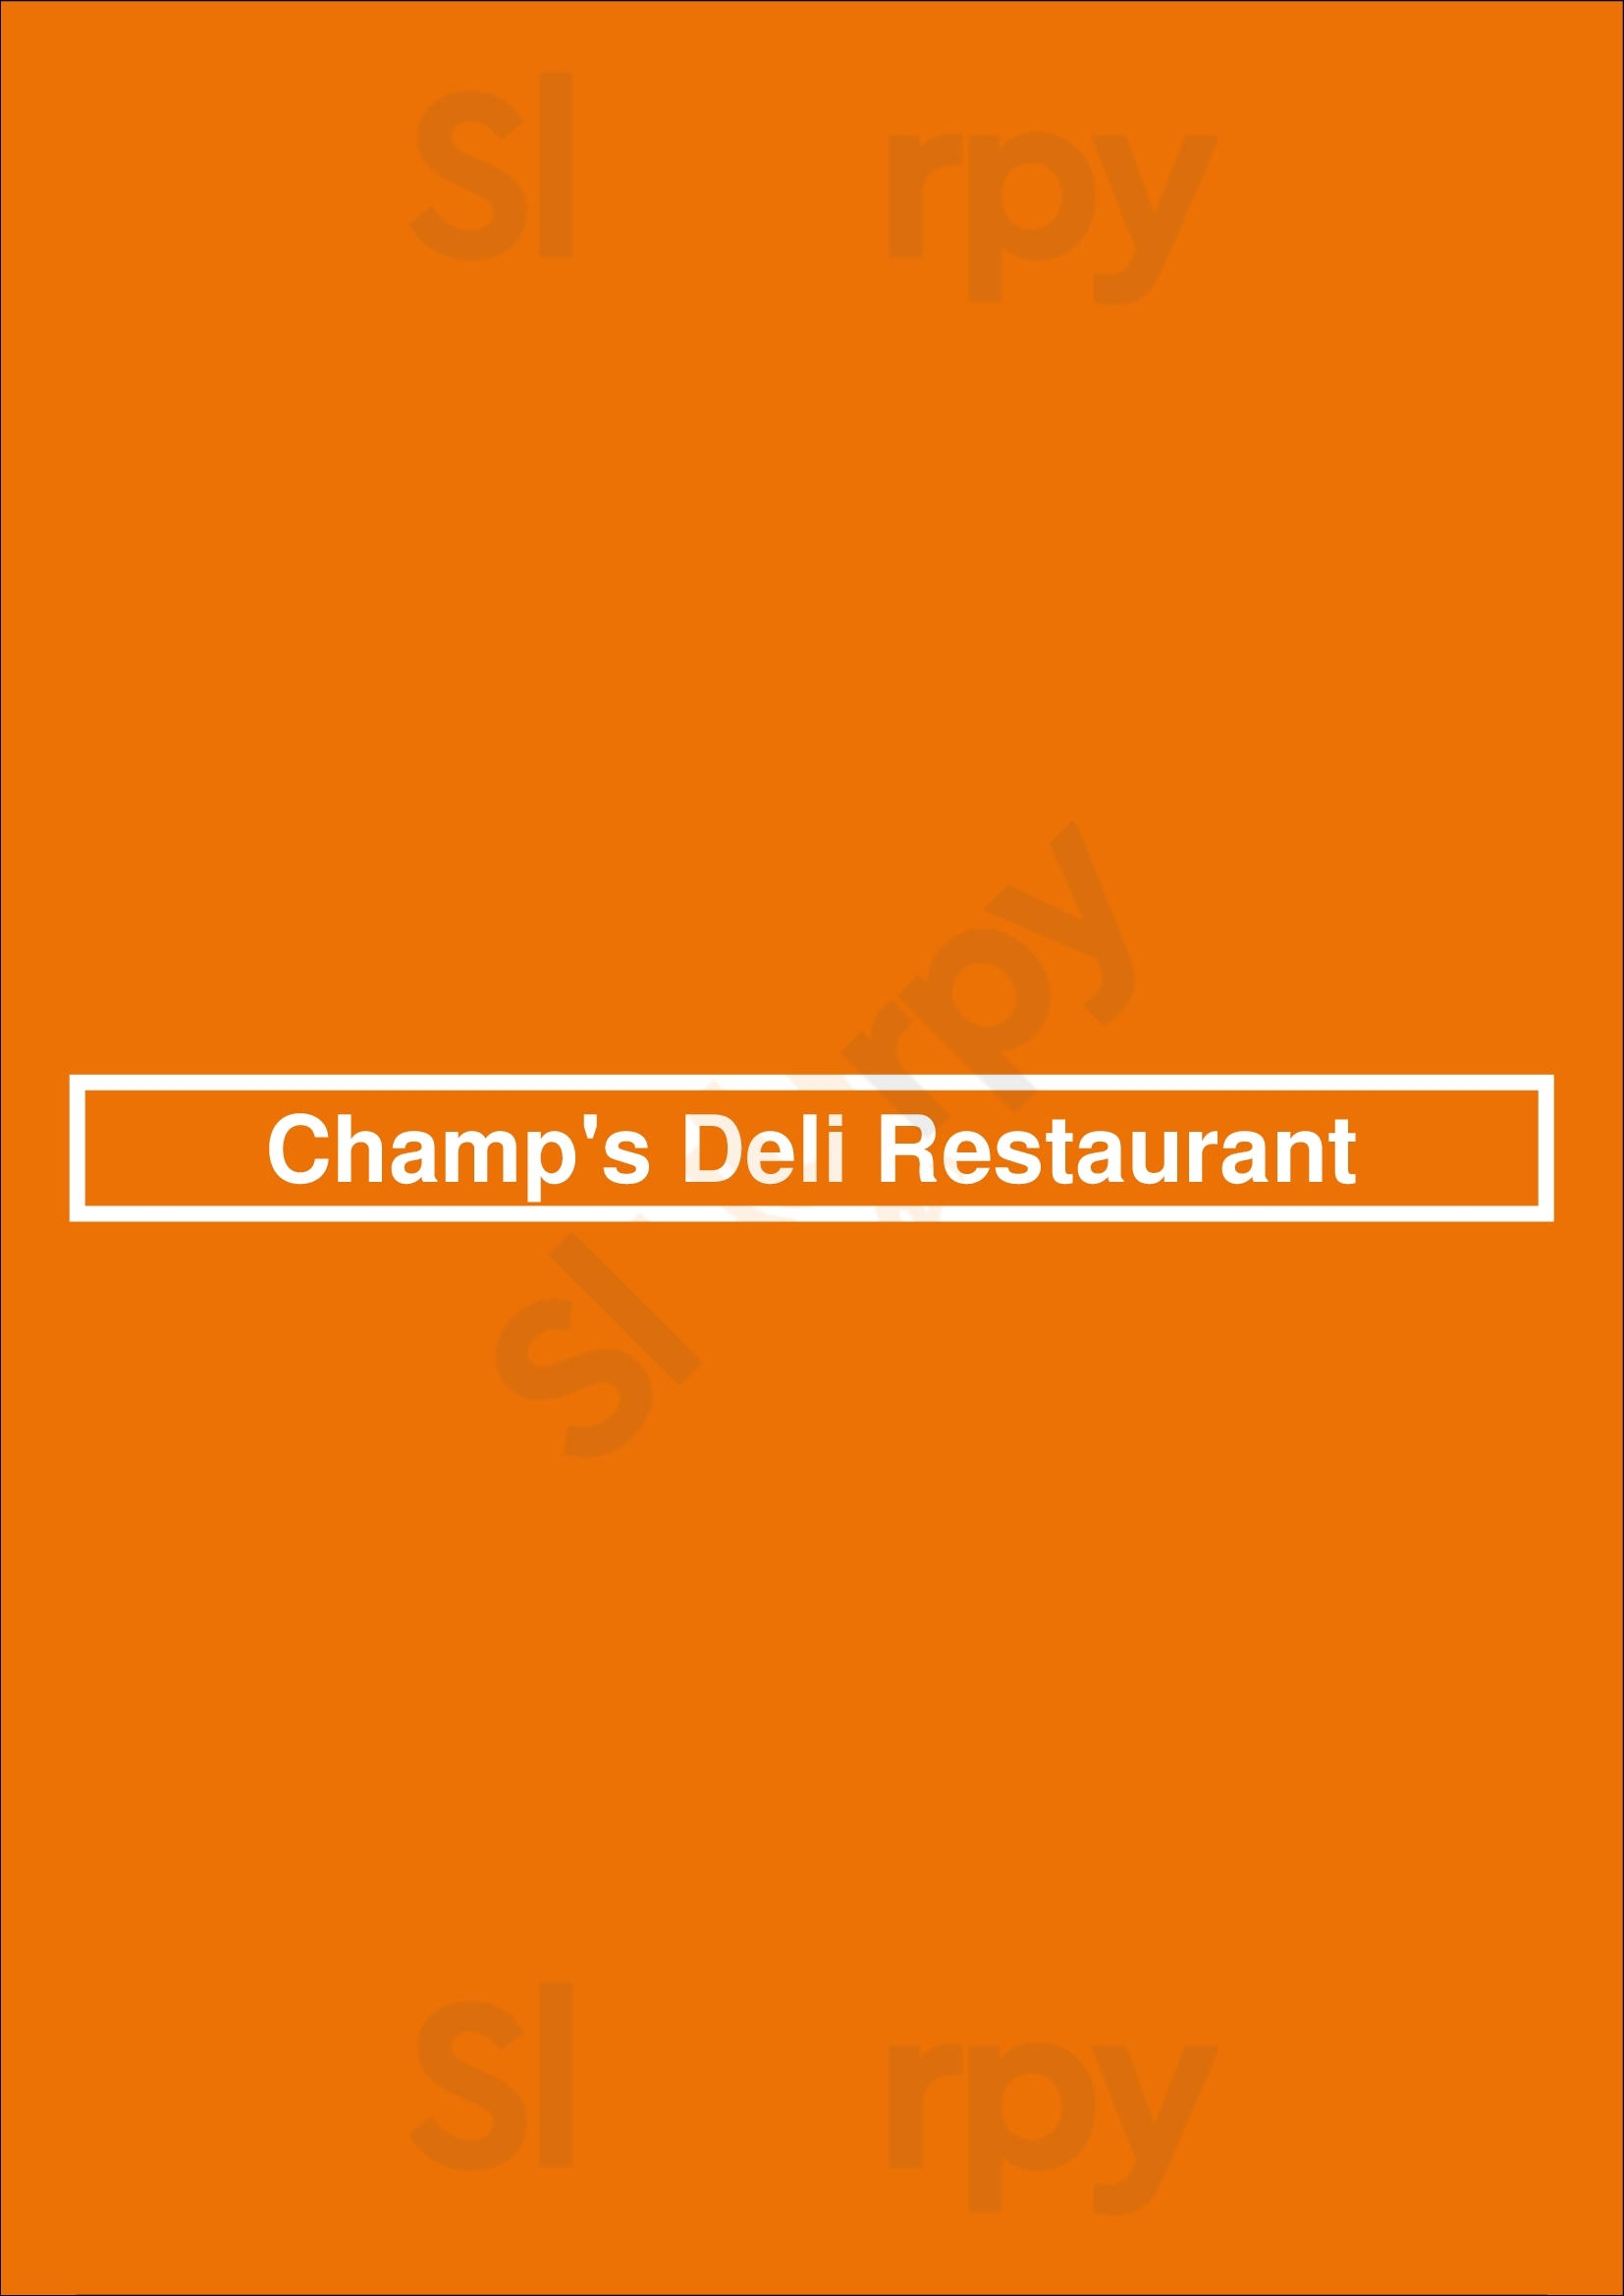 Champ's Deli Restaurant Signal Hill Menu - 1